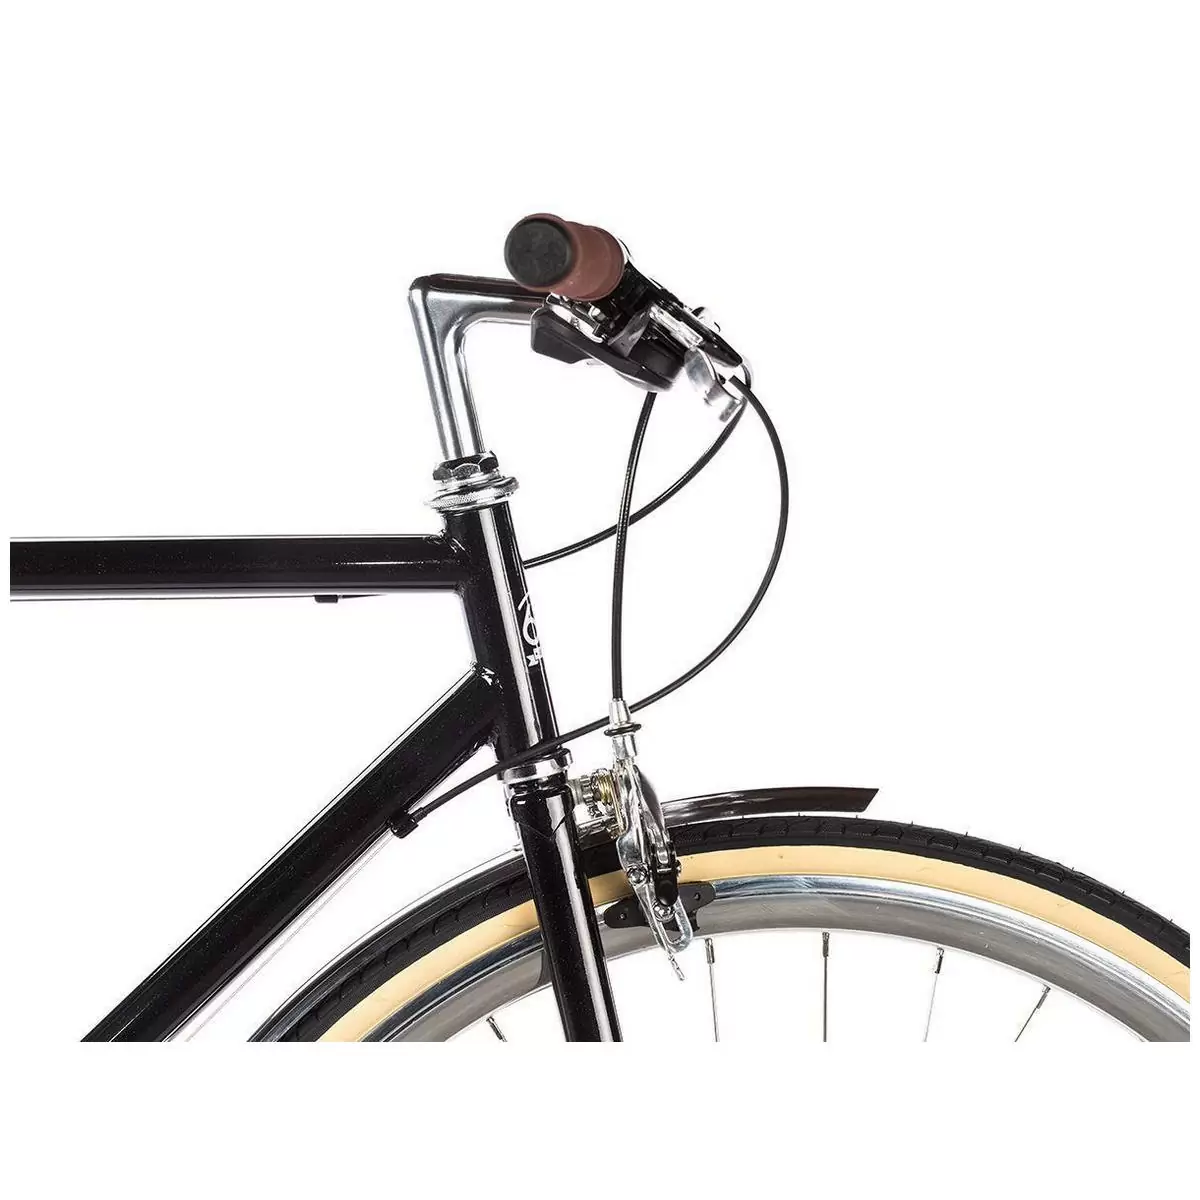 Bicicleta urbana ODYSSEY 8v Delano negra grande 58cm #3